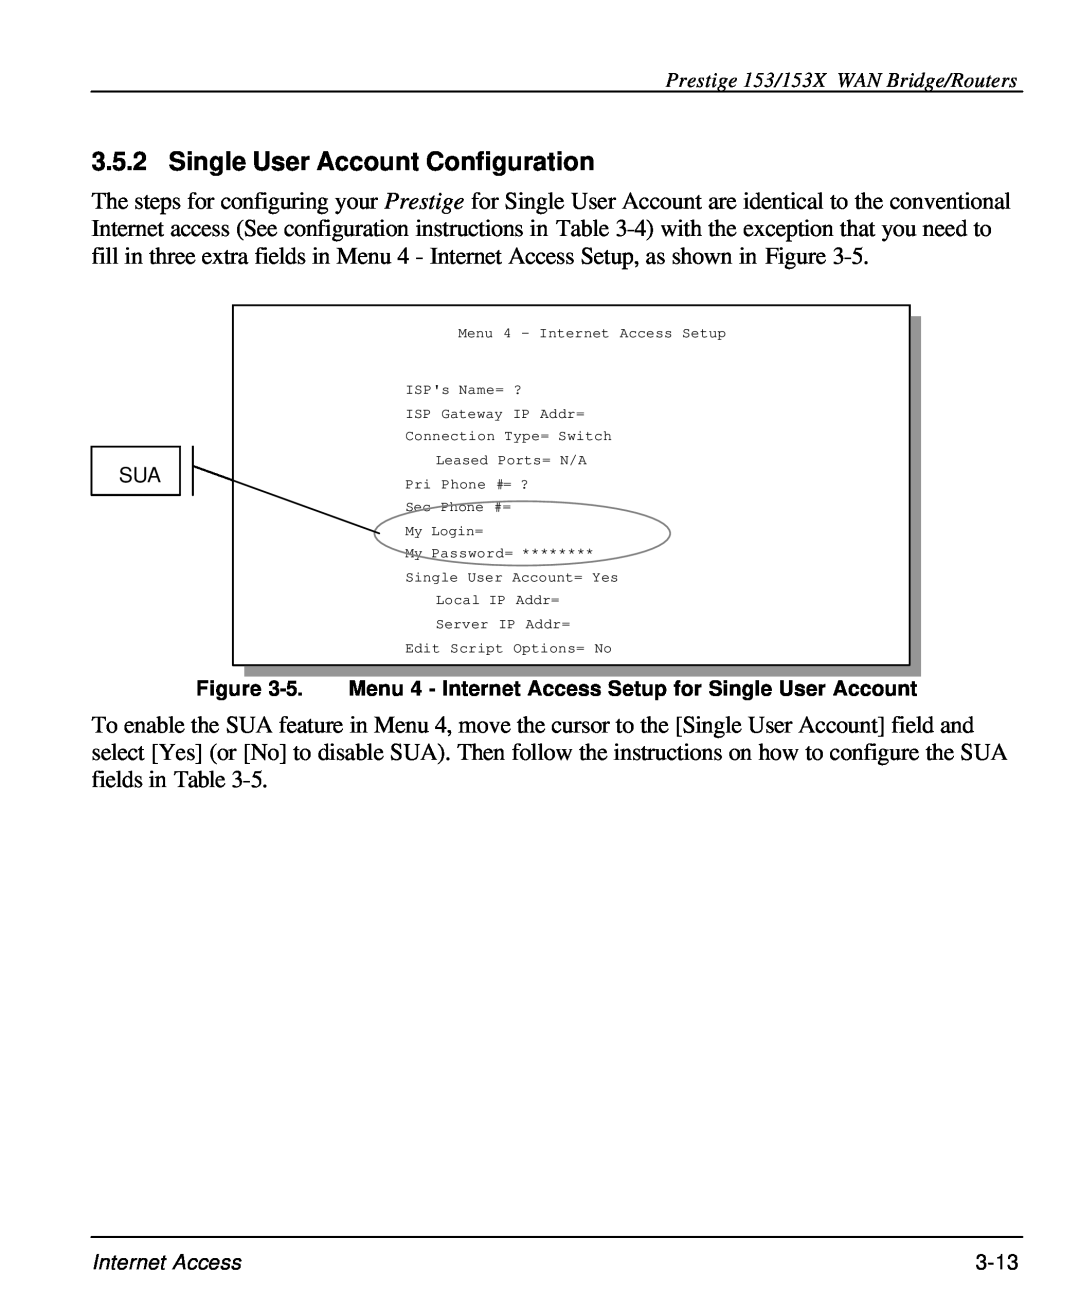 ZyXEL Communications 153X Single User Account Configuration, 5. Menu 4 - Internet Access Setup for Single User Account 